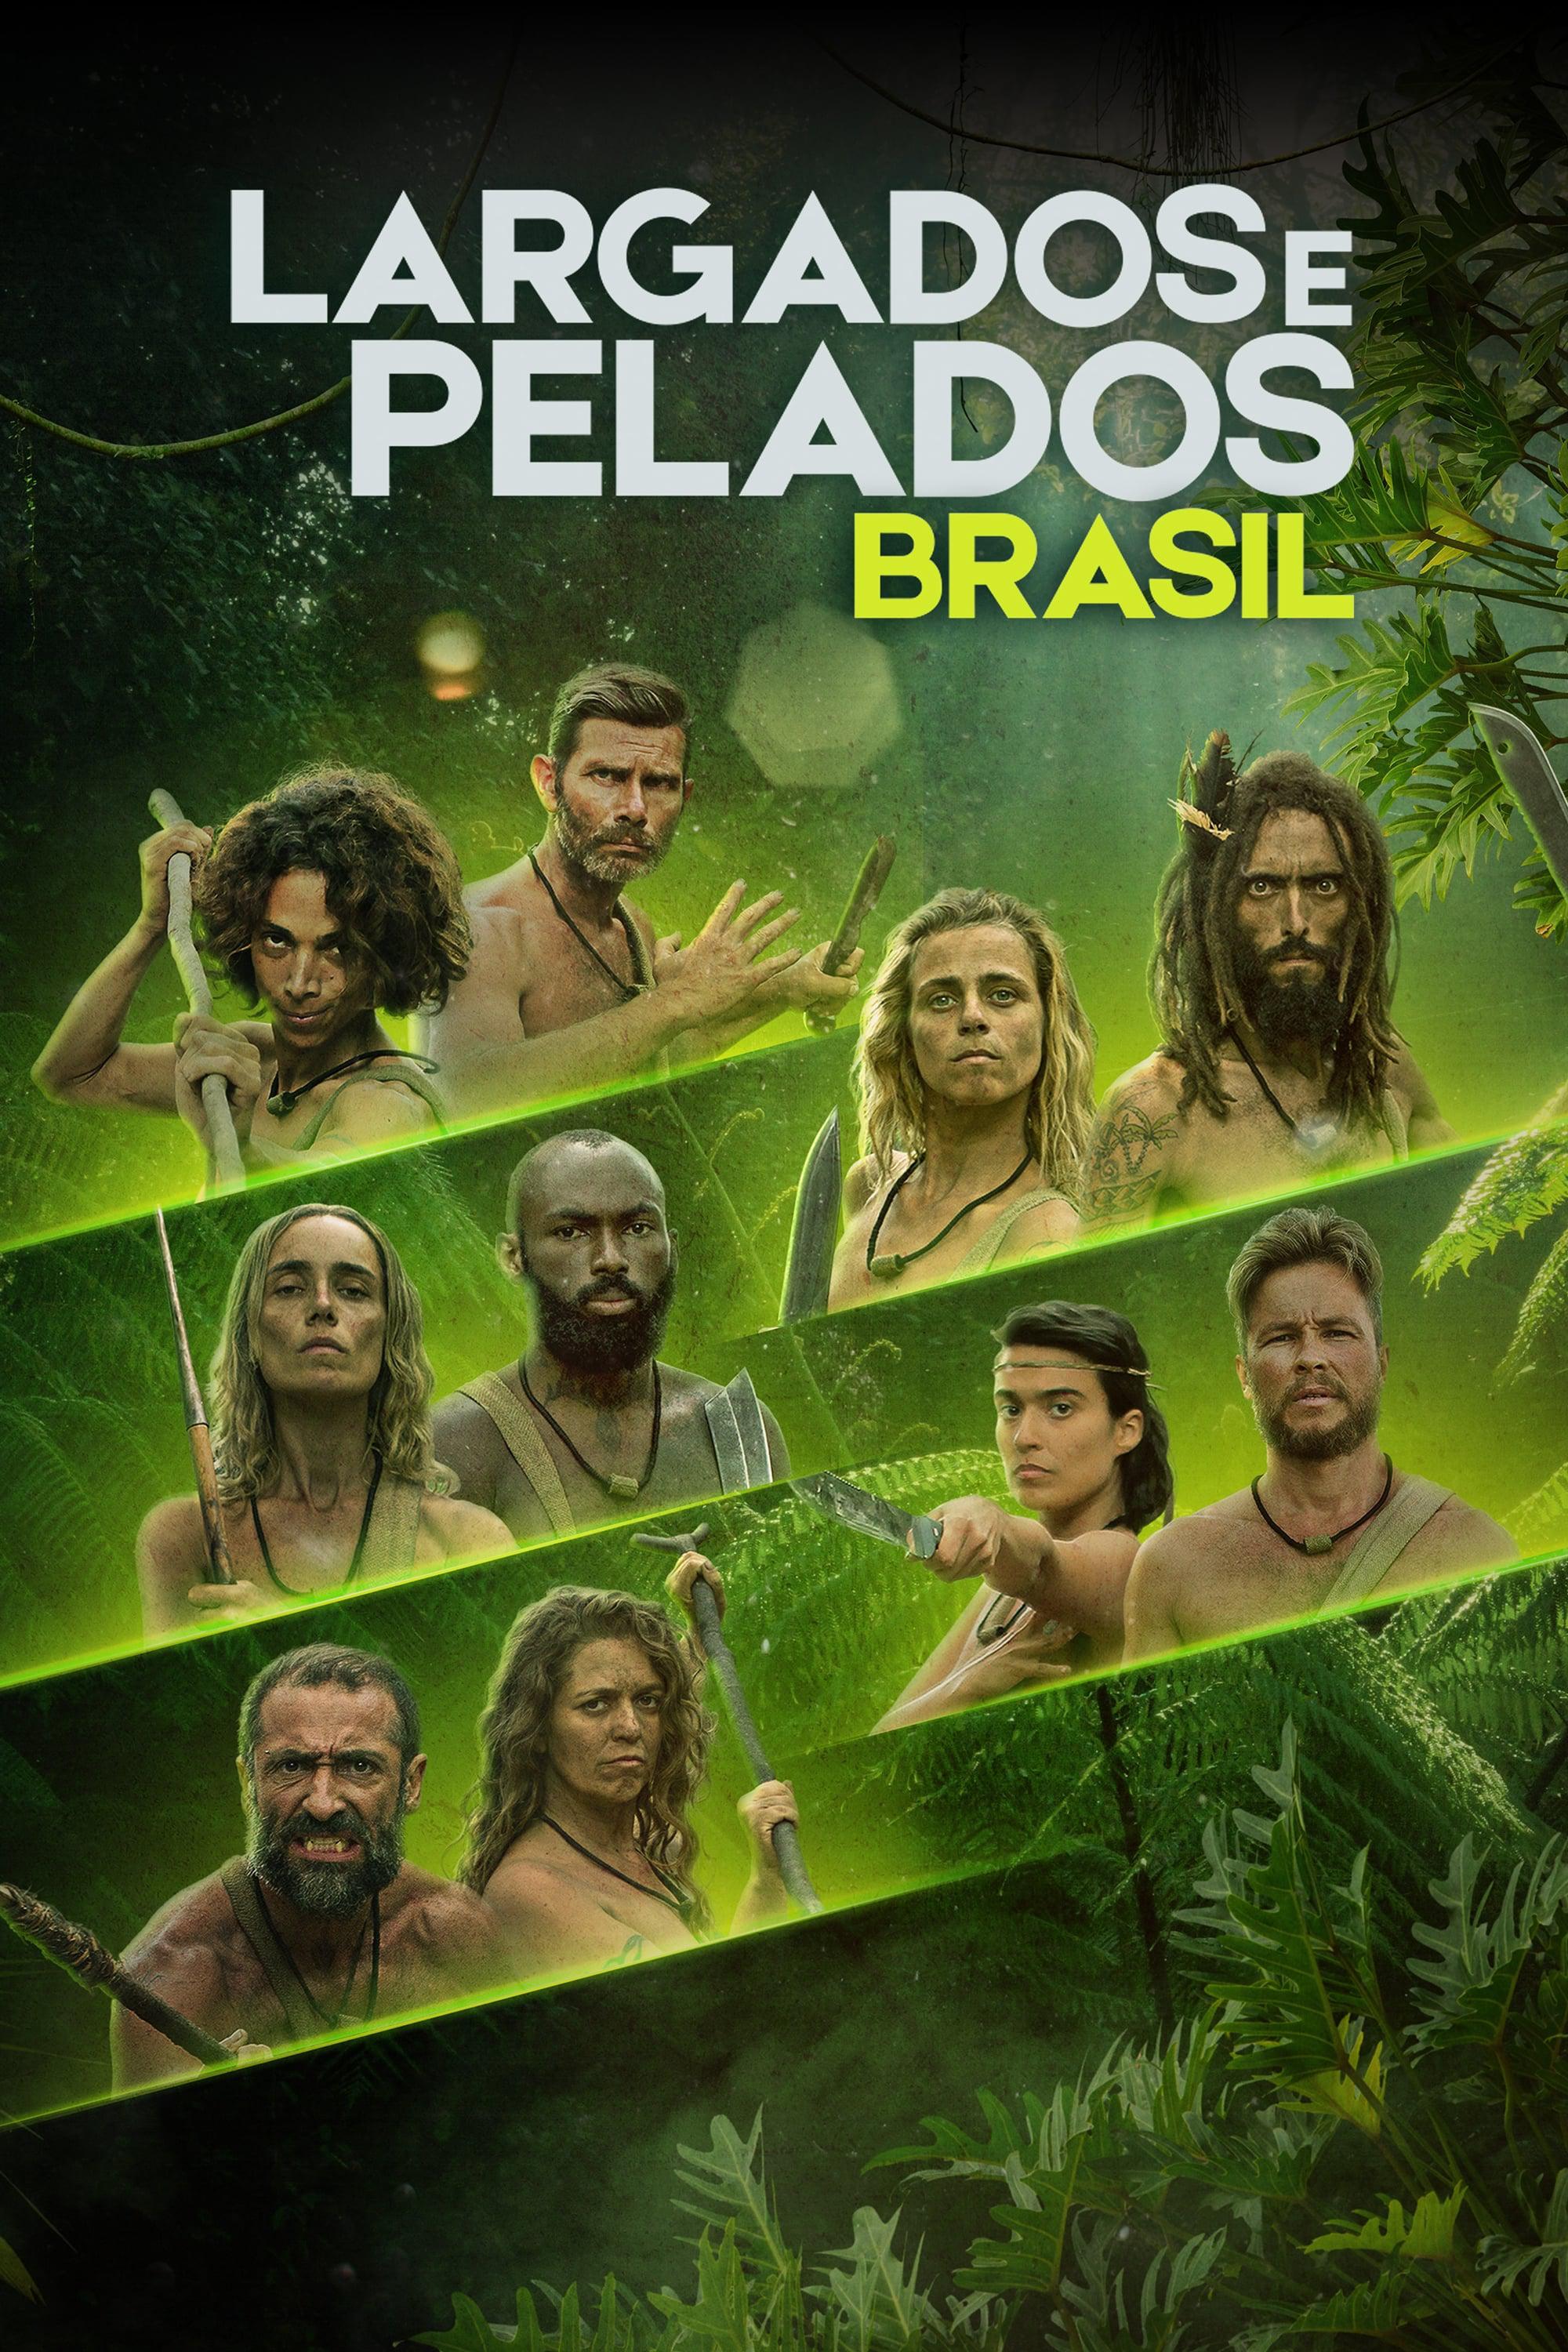 TV ratings for Naked And Afraid Brazil (Largados E Pelados Brasil) in Australia. Discovery+ TV series